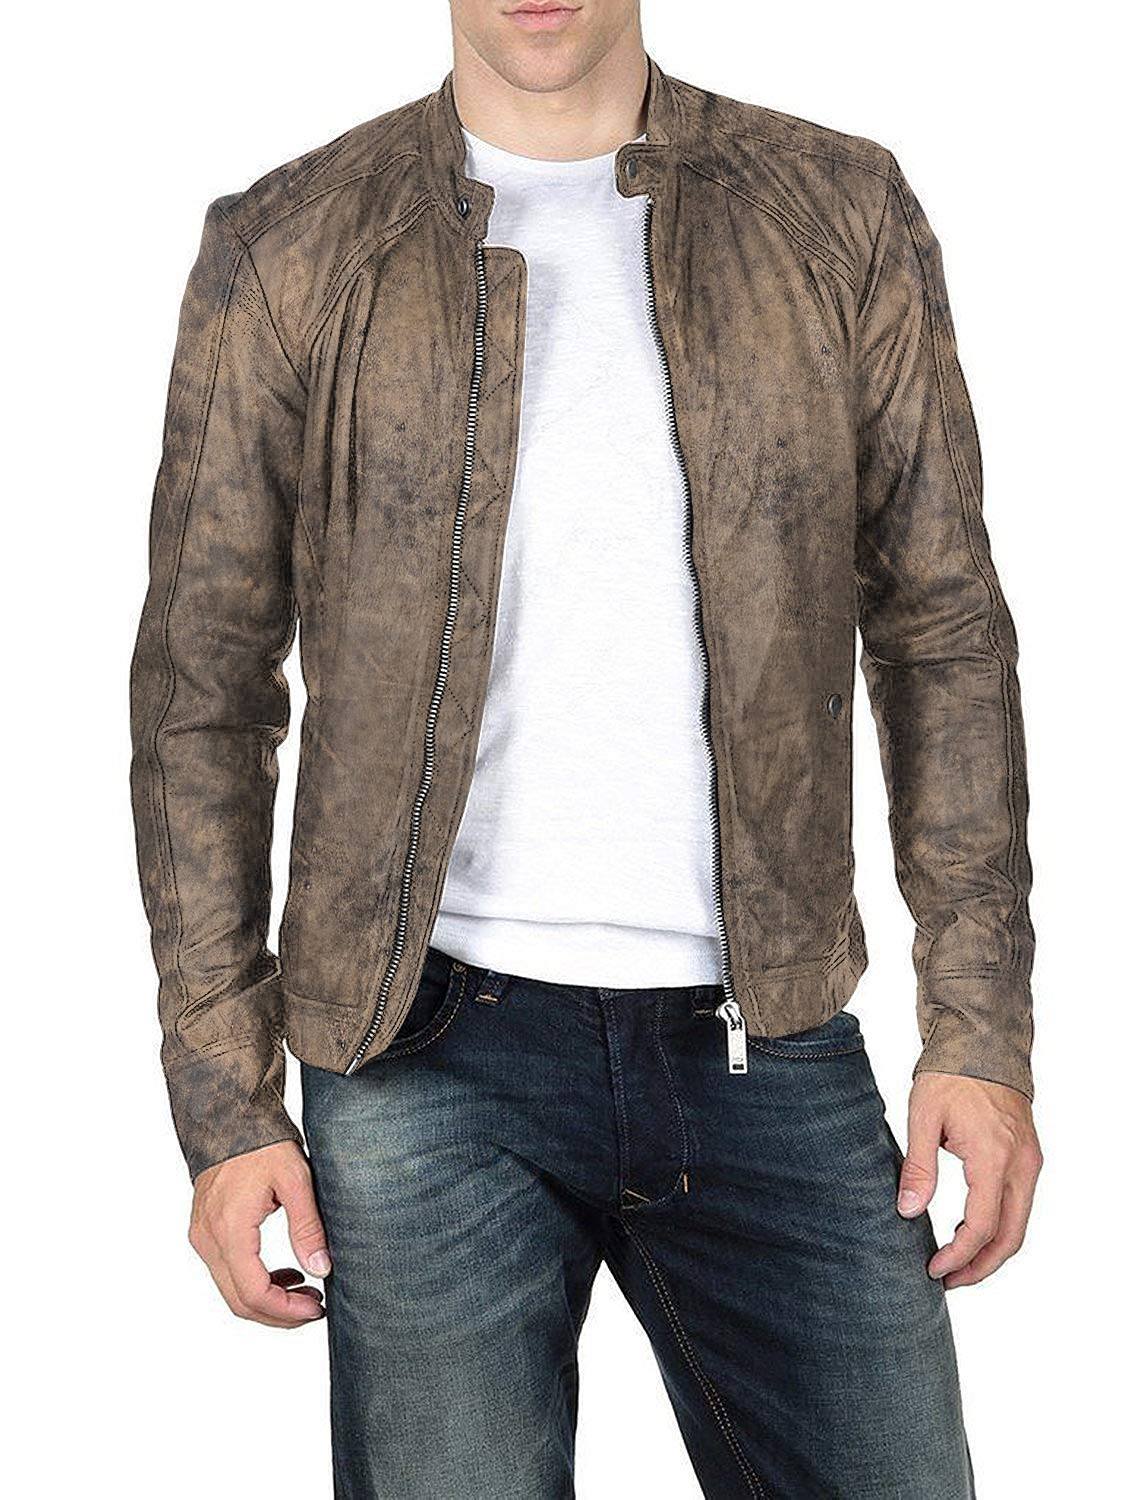 Leather Jackets Hub Mens Genuine Lambskin Leather Jacket (Black, Classic Jacket) - 1501011